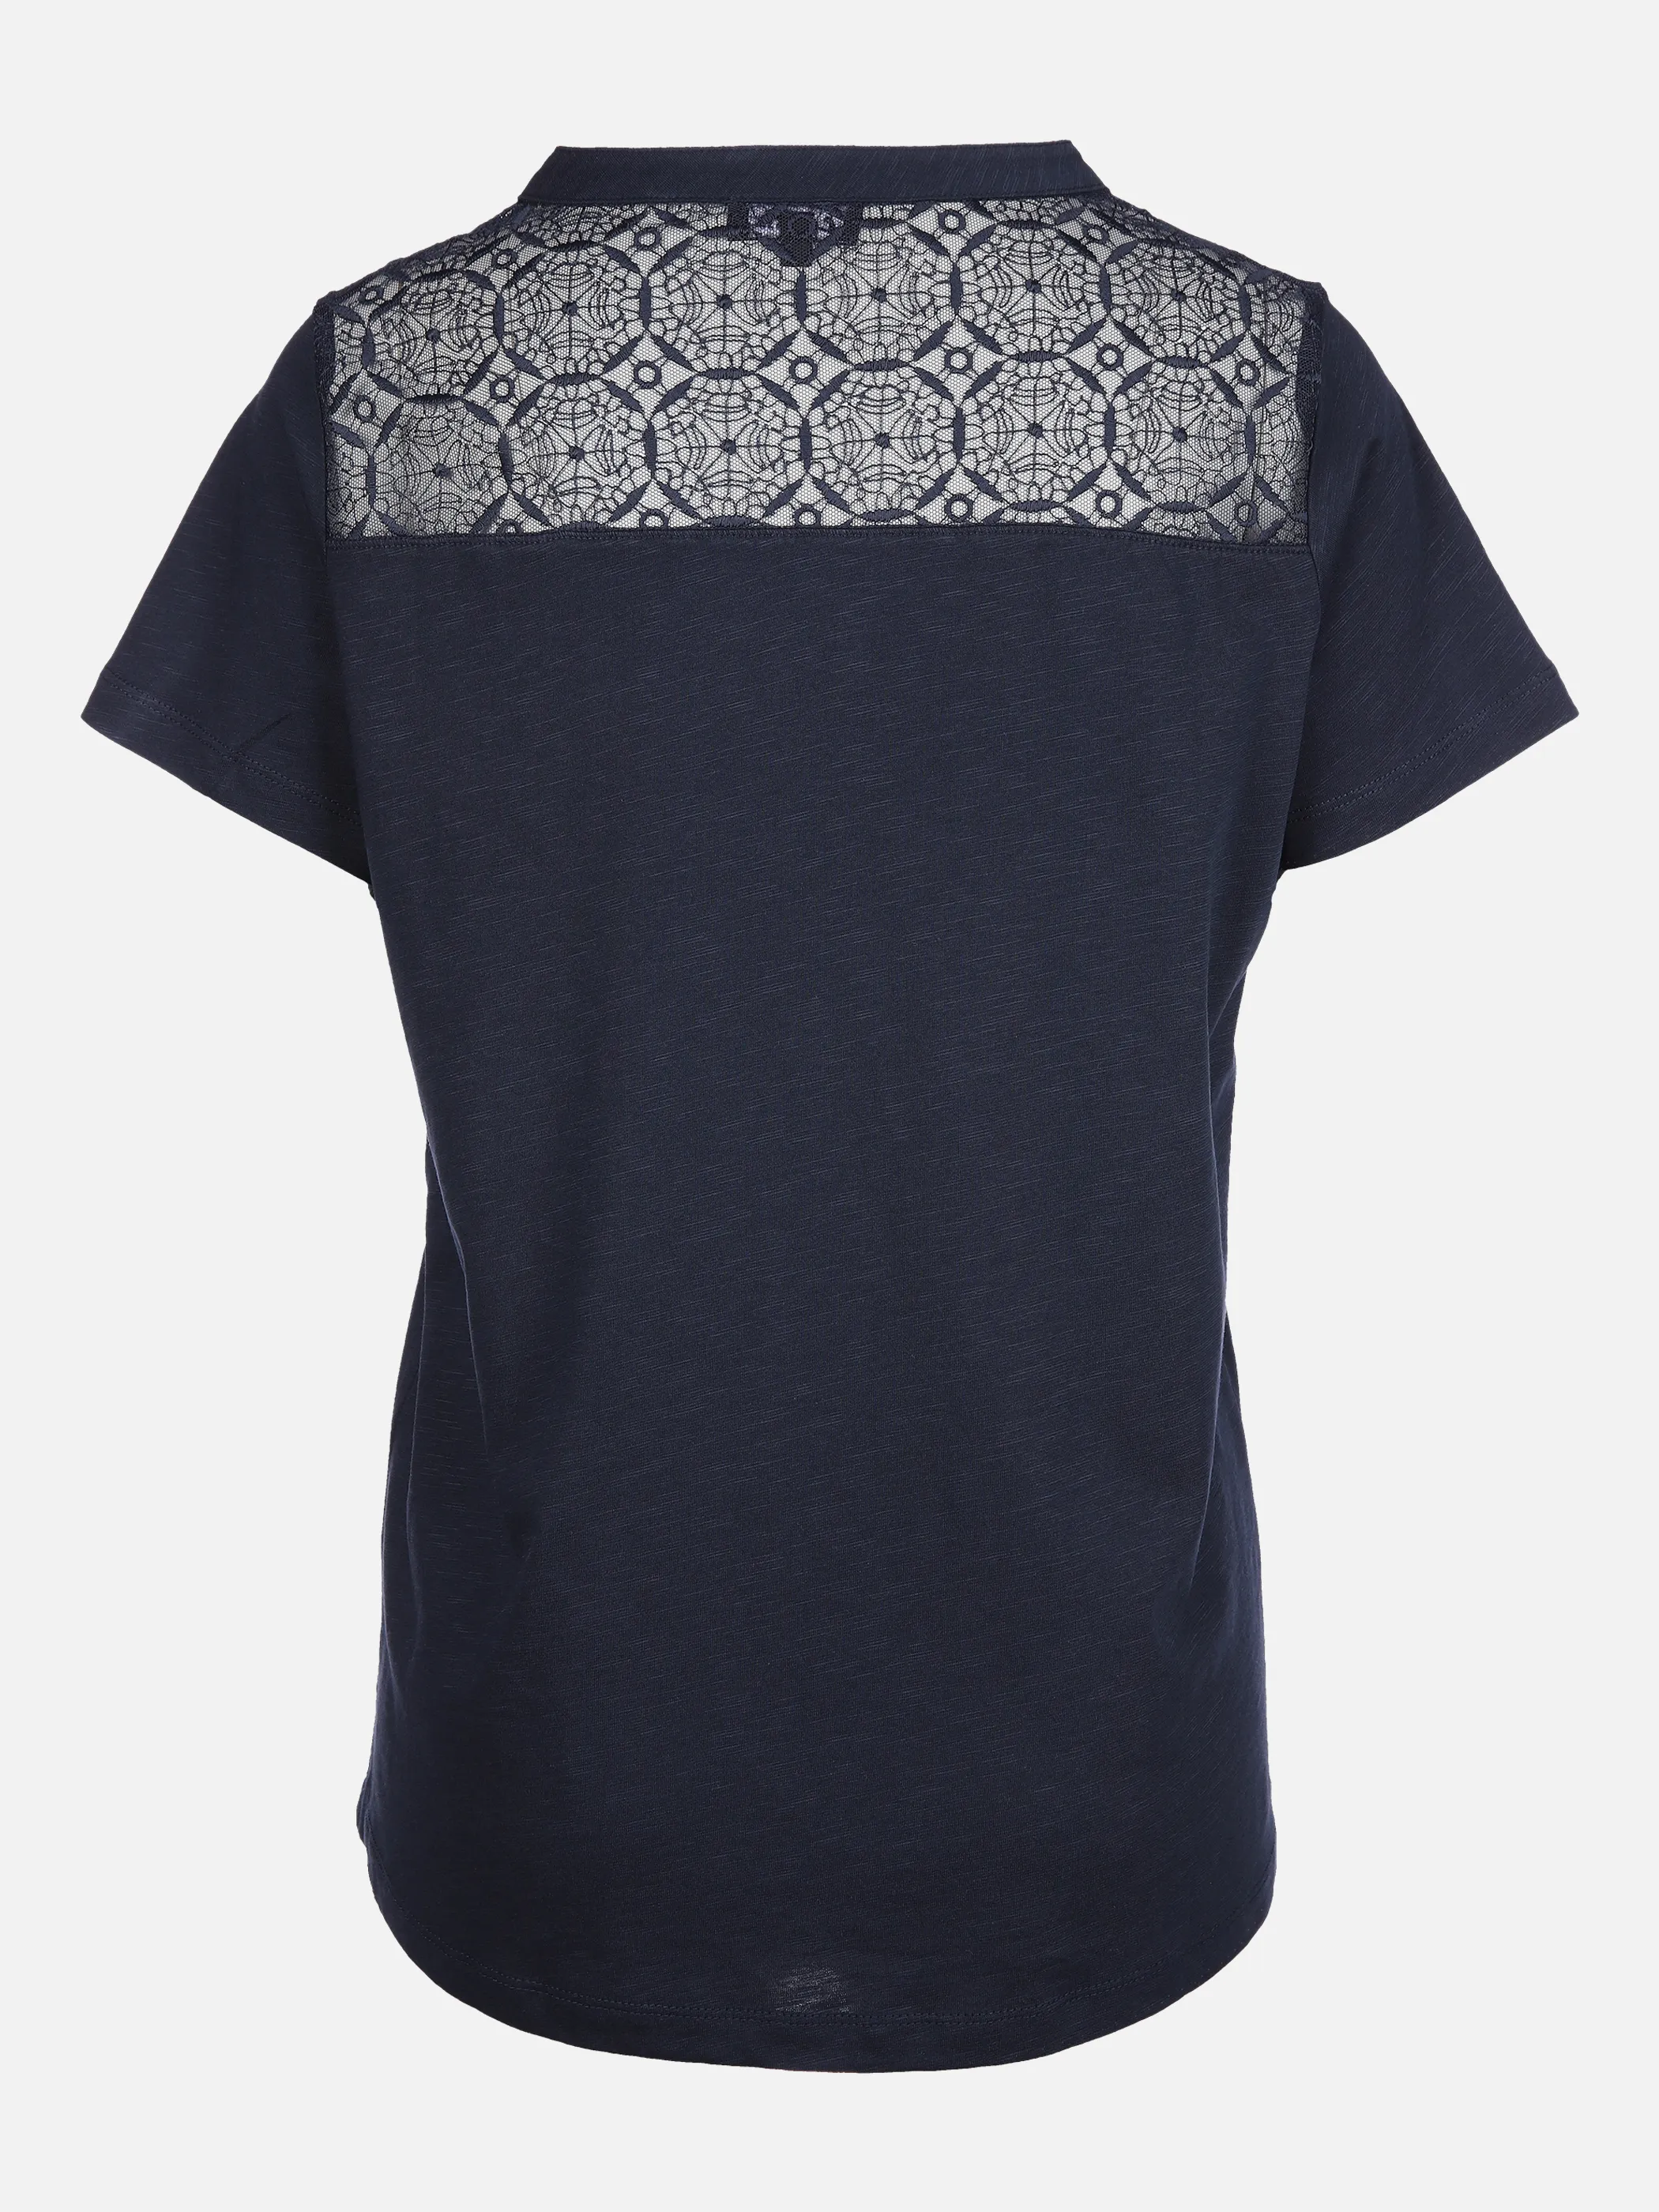 Lisa Tossa Da-T-Shirt in Materialmix Blau 864812 MARINE 2